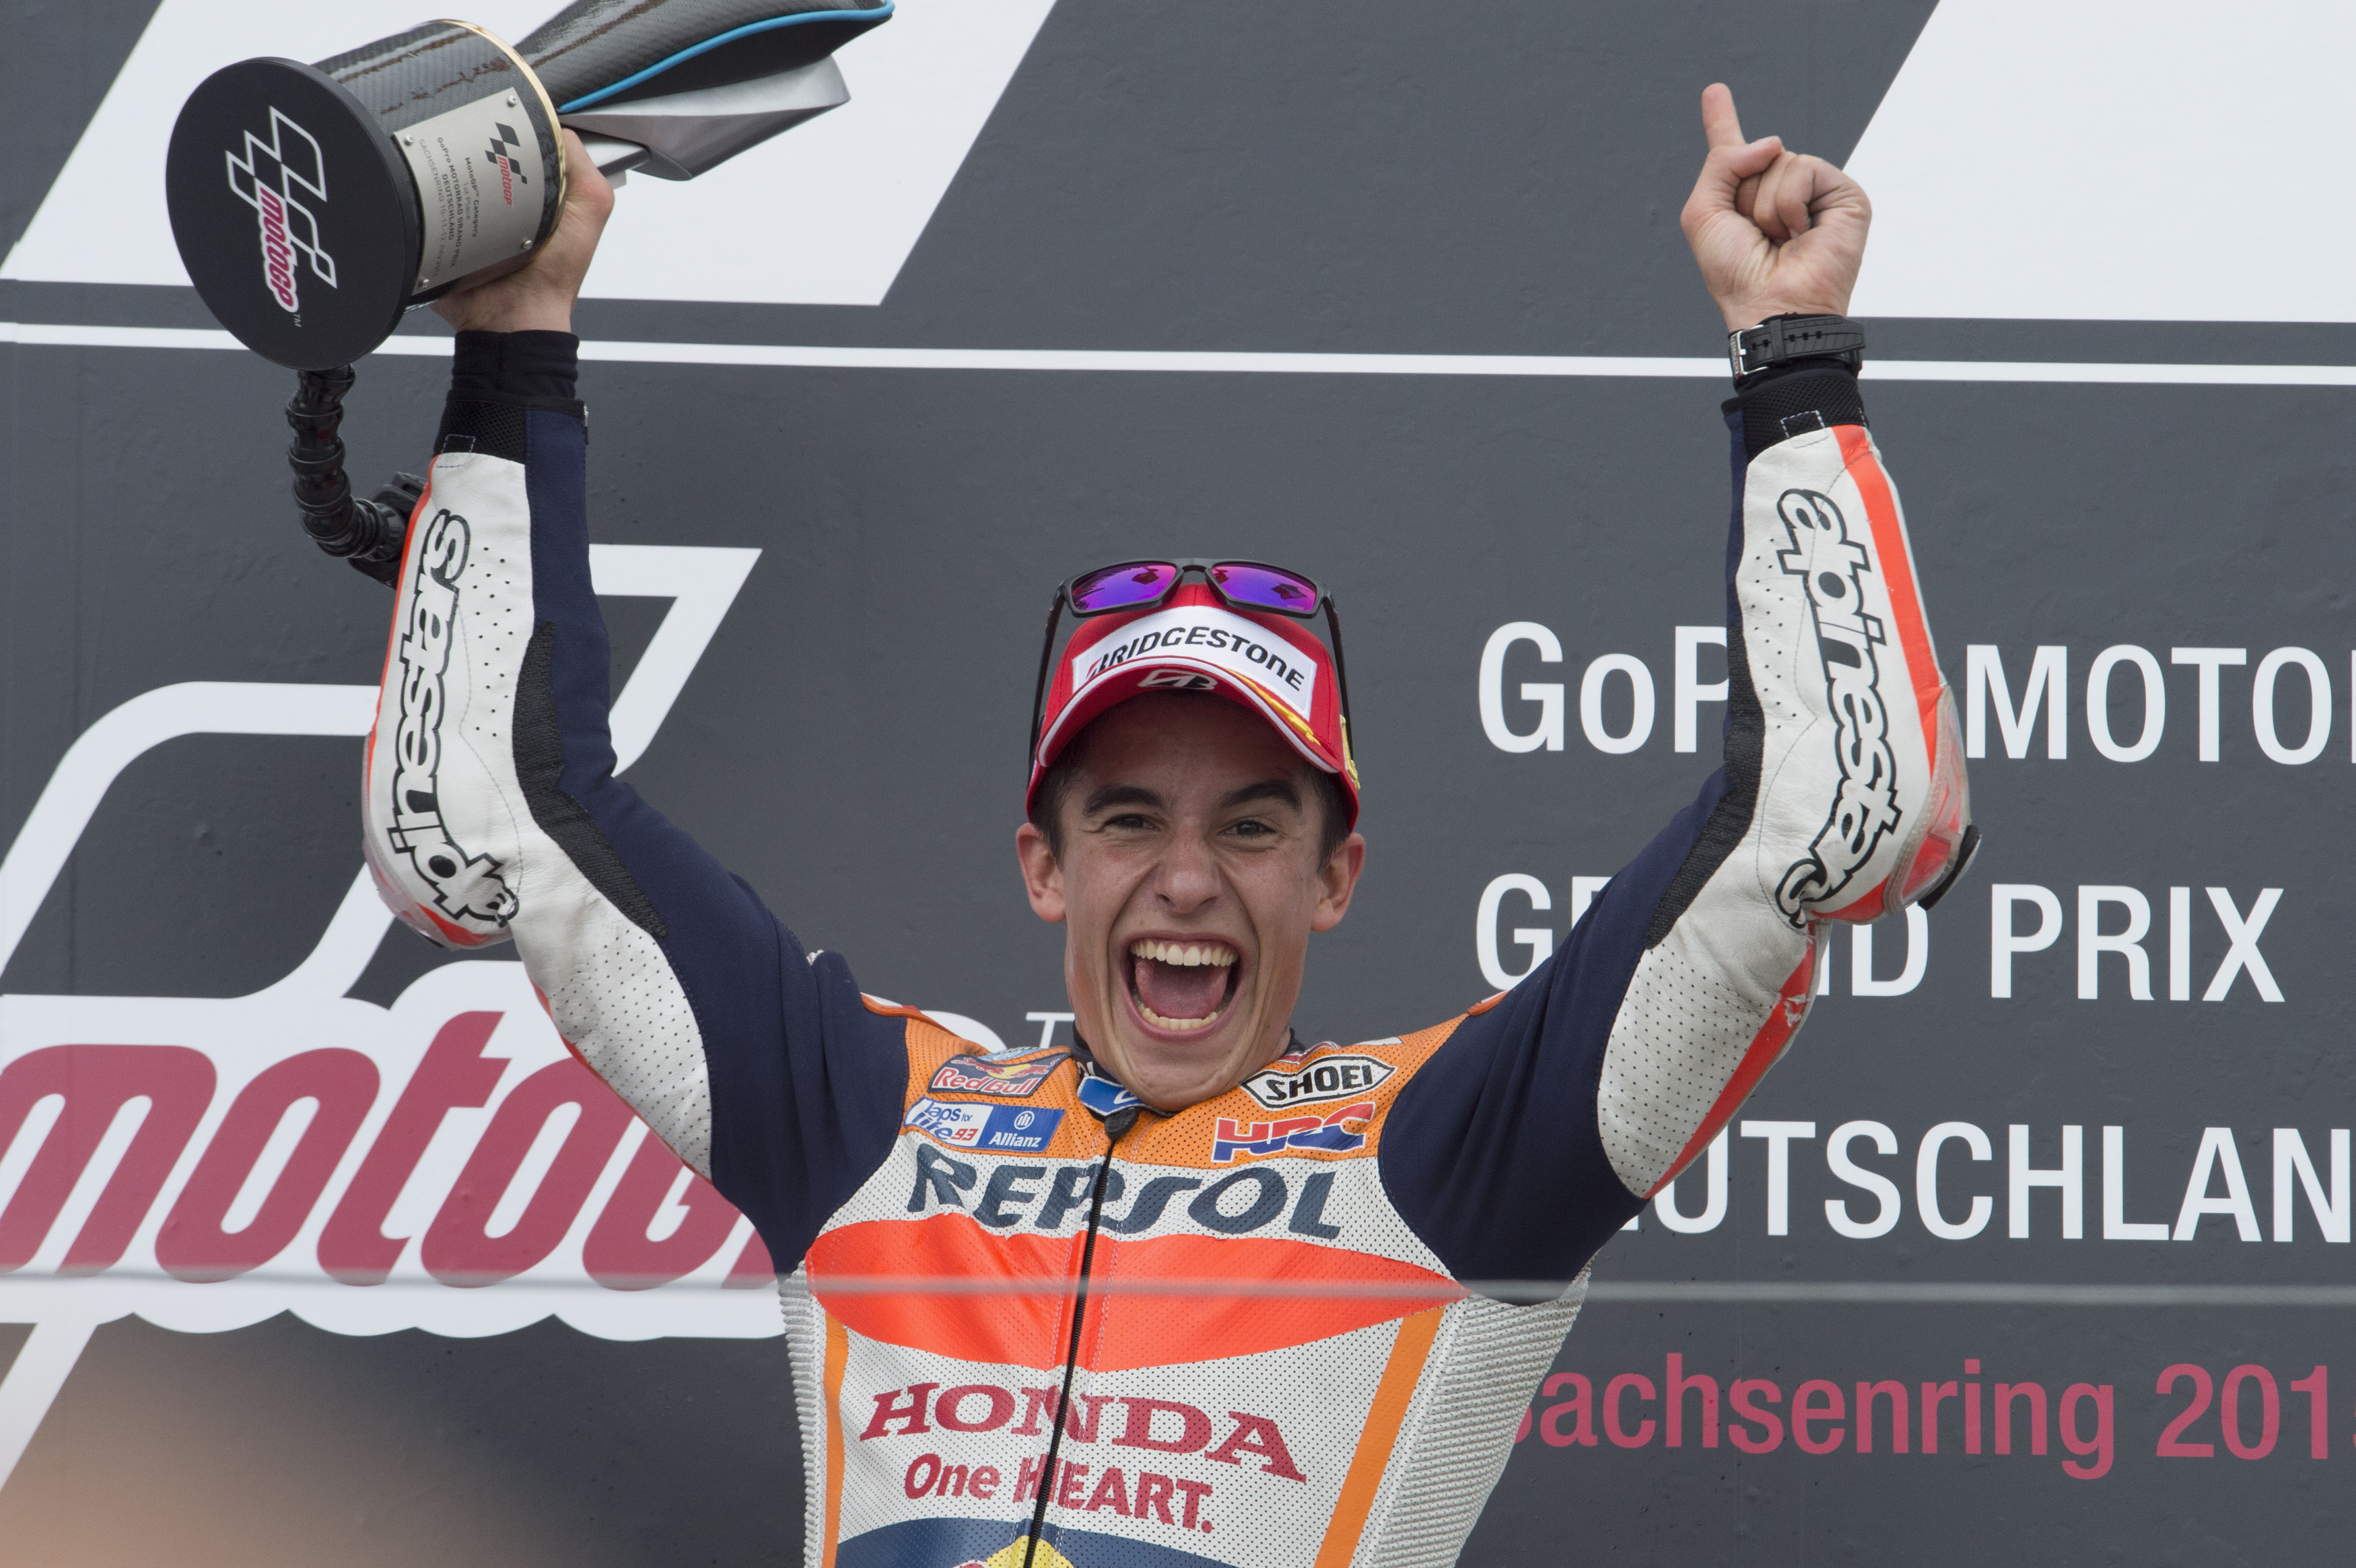 MotoGP 2015: championship standings after Sachsenring